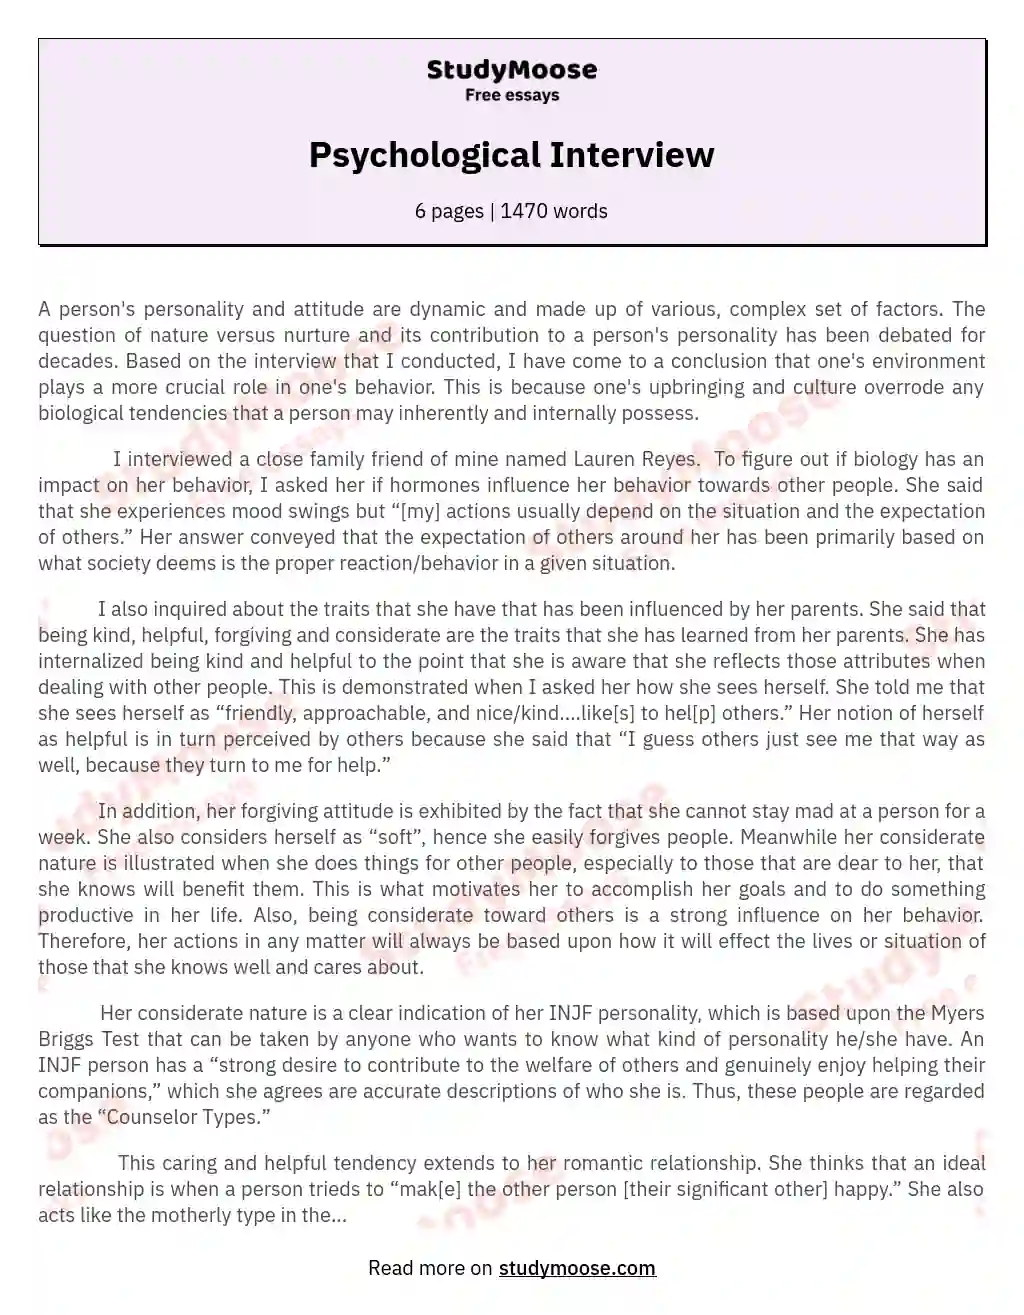 Psychological Interview essay